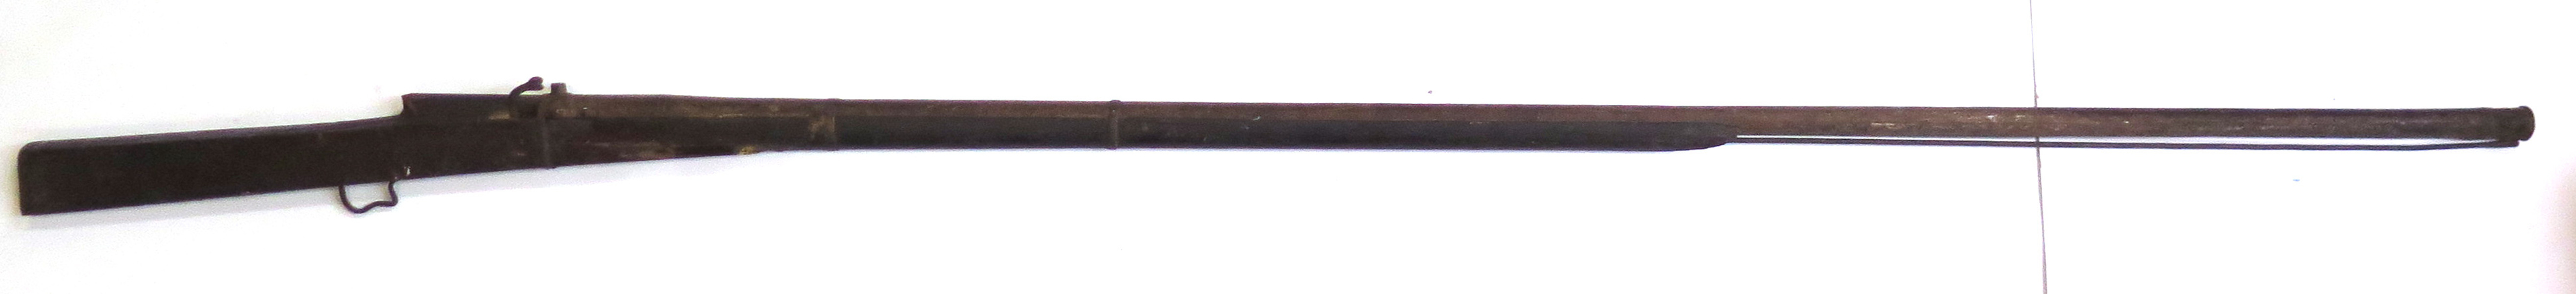 Toradar, smide med trästock, Indien, 18-1900-tal, luntlåsmekanism, _11402a_8d94b689e1946f8_lg.jpeg